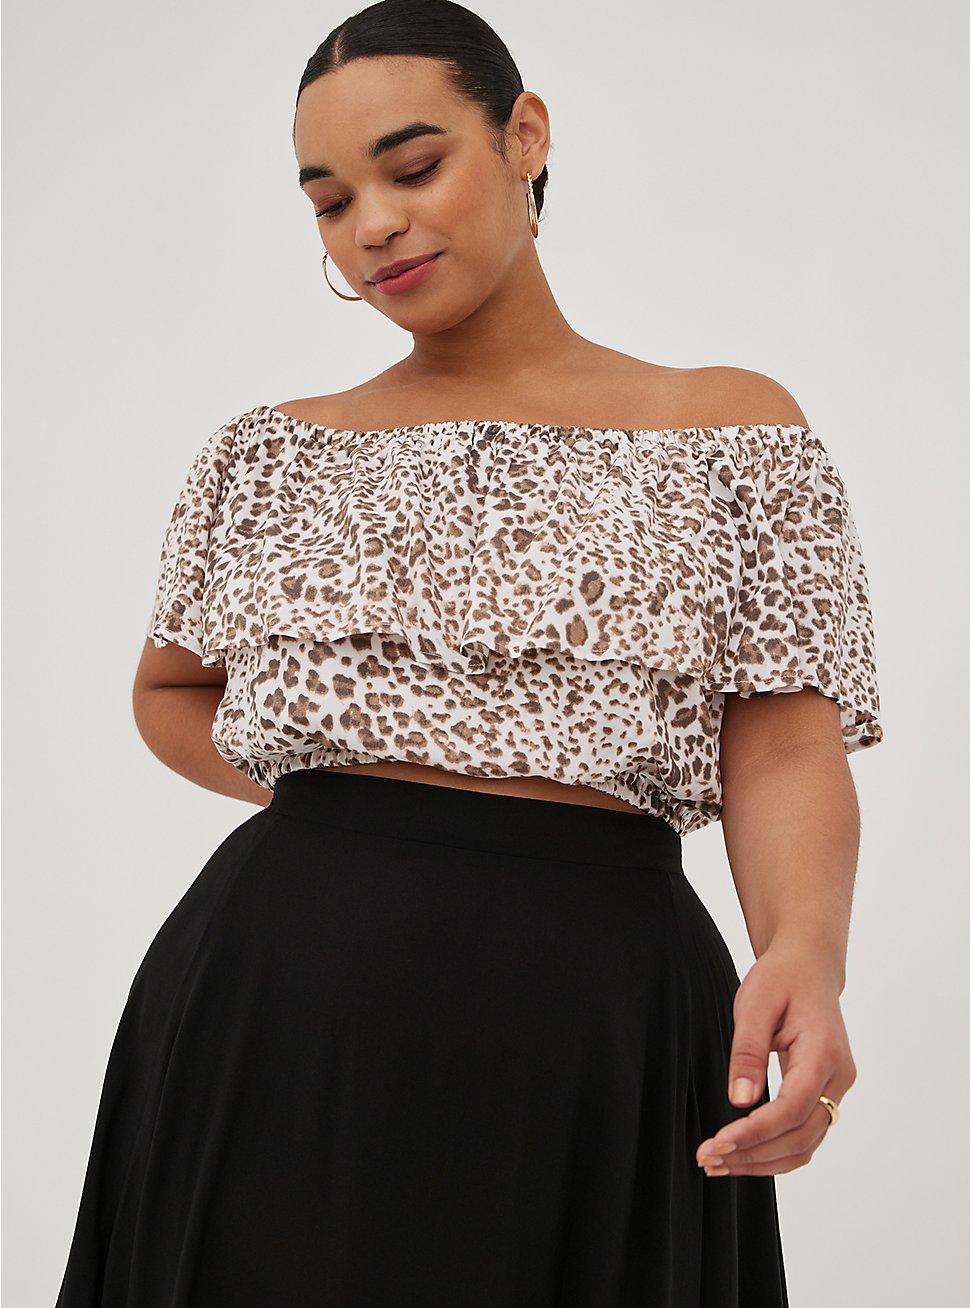 Plus Size Top & Skirt Set - Challis Leopard & Black, BLACK  WHITE, hi-res